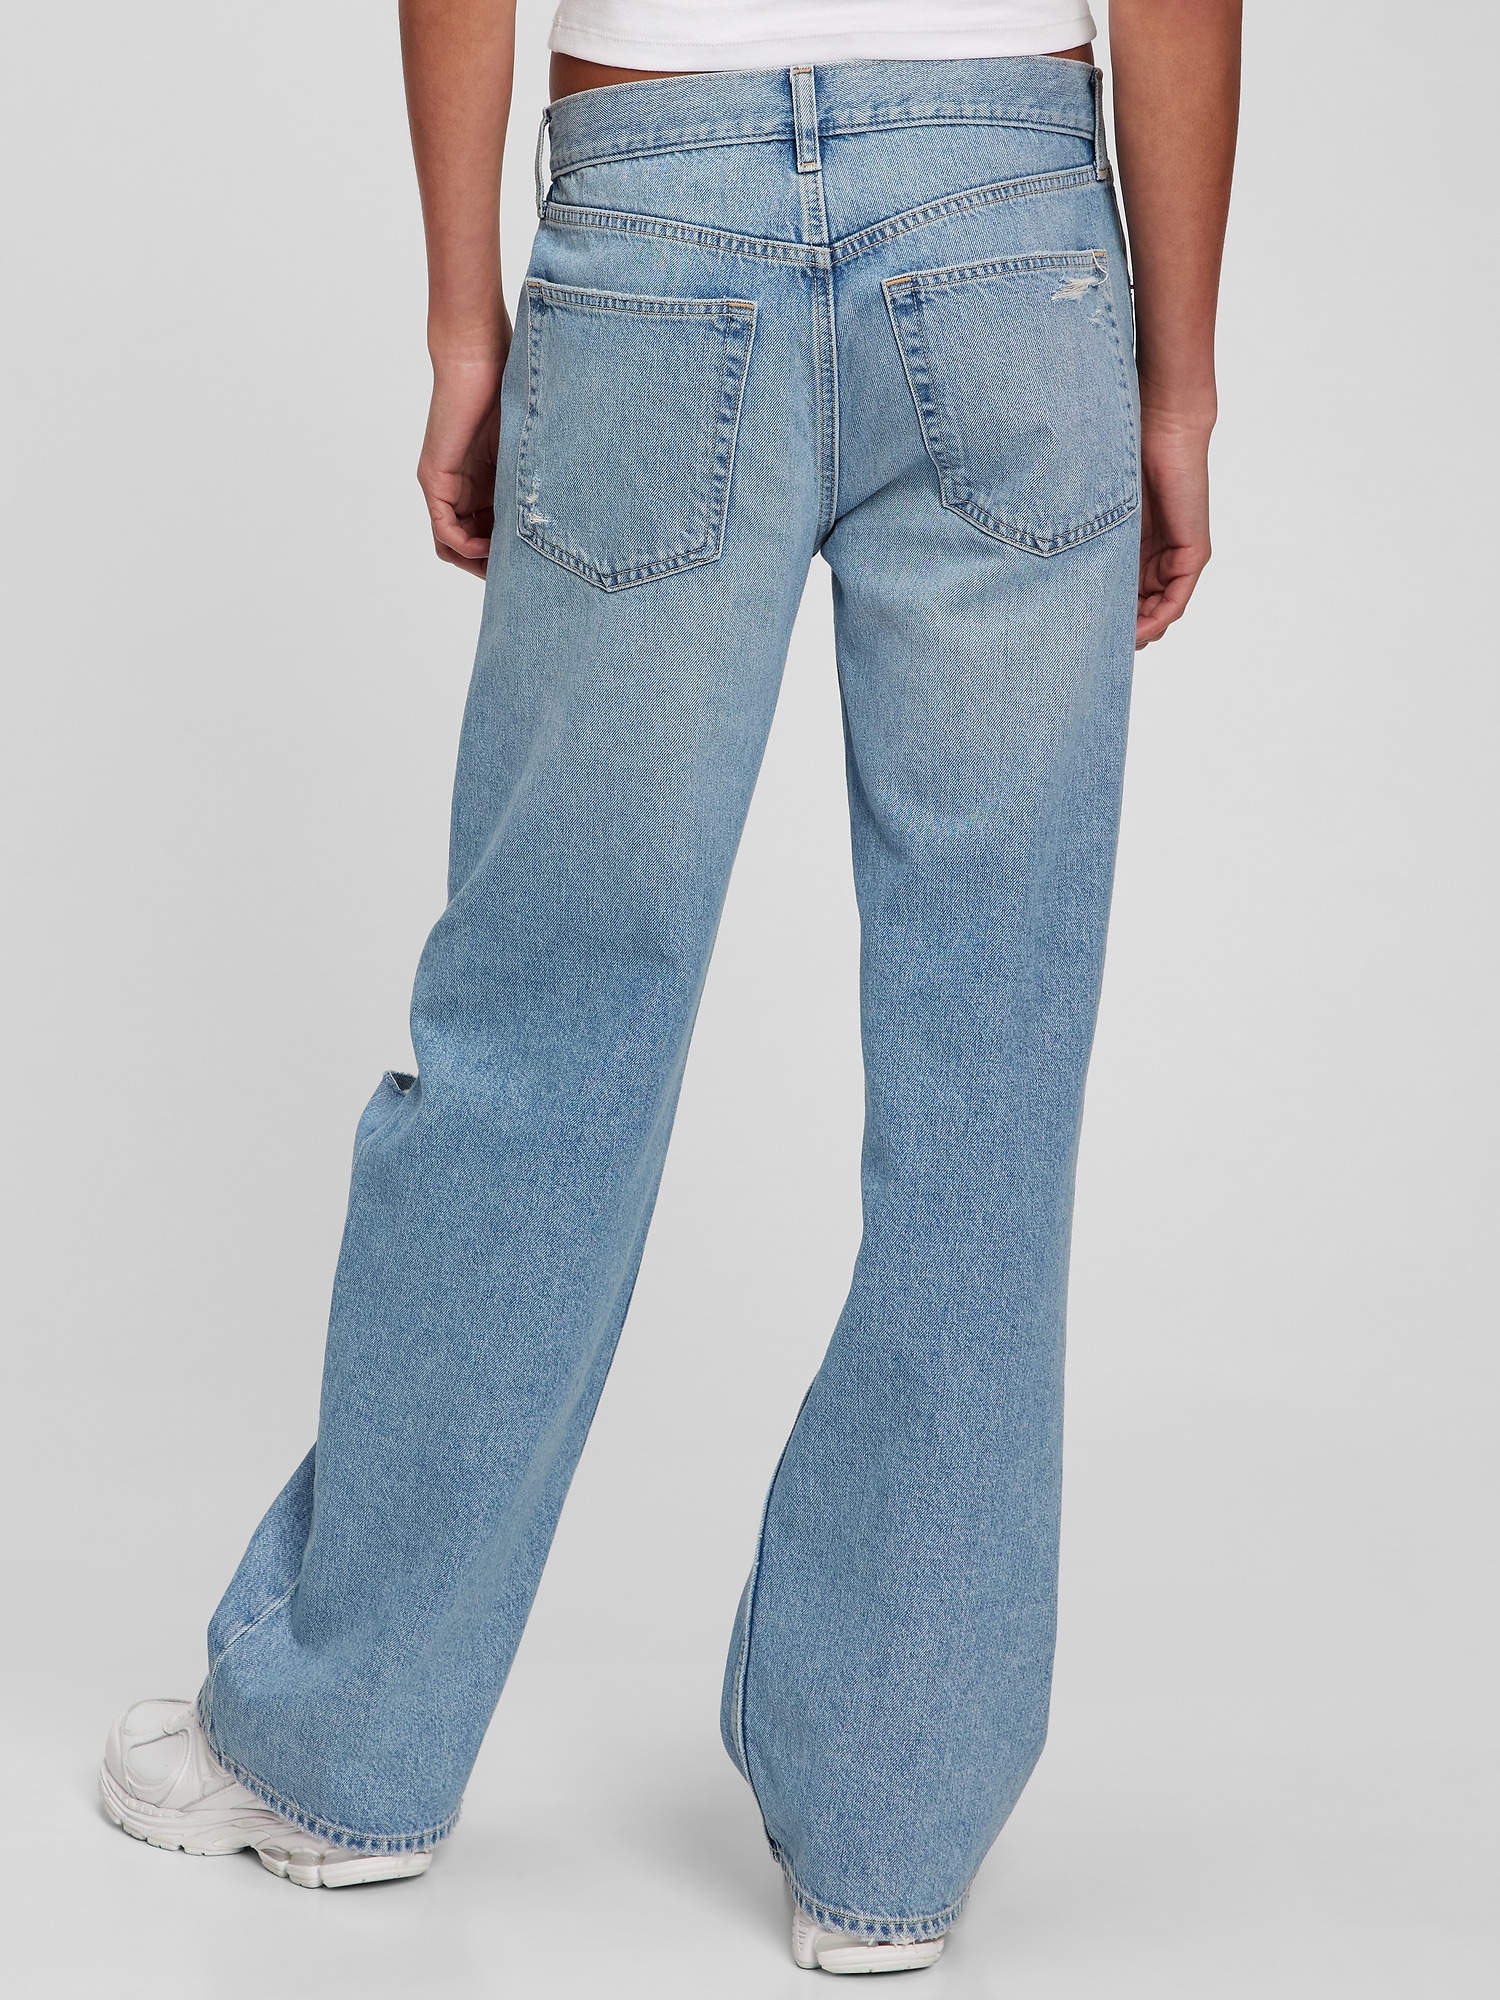 washwell jeans